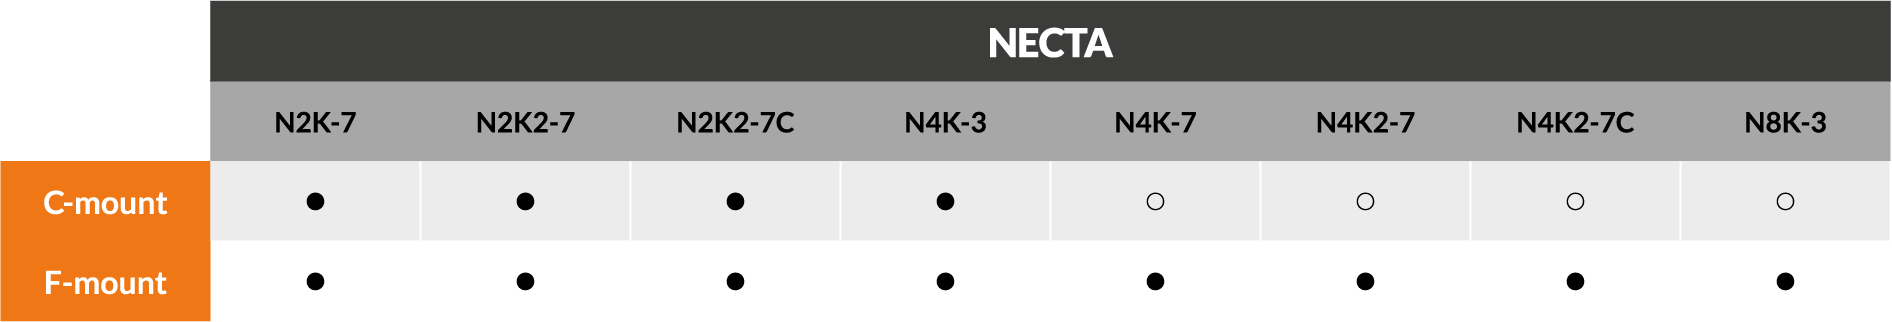 NECTA compatibility chart